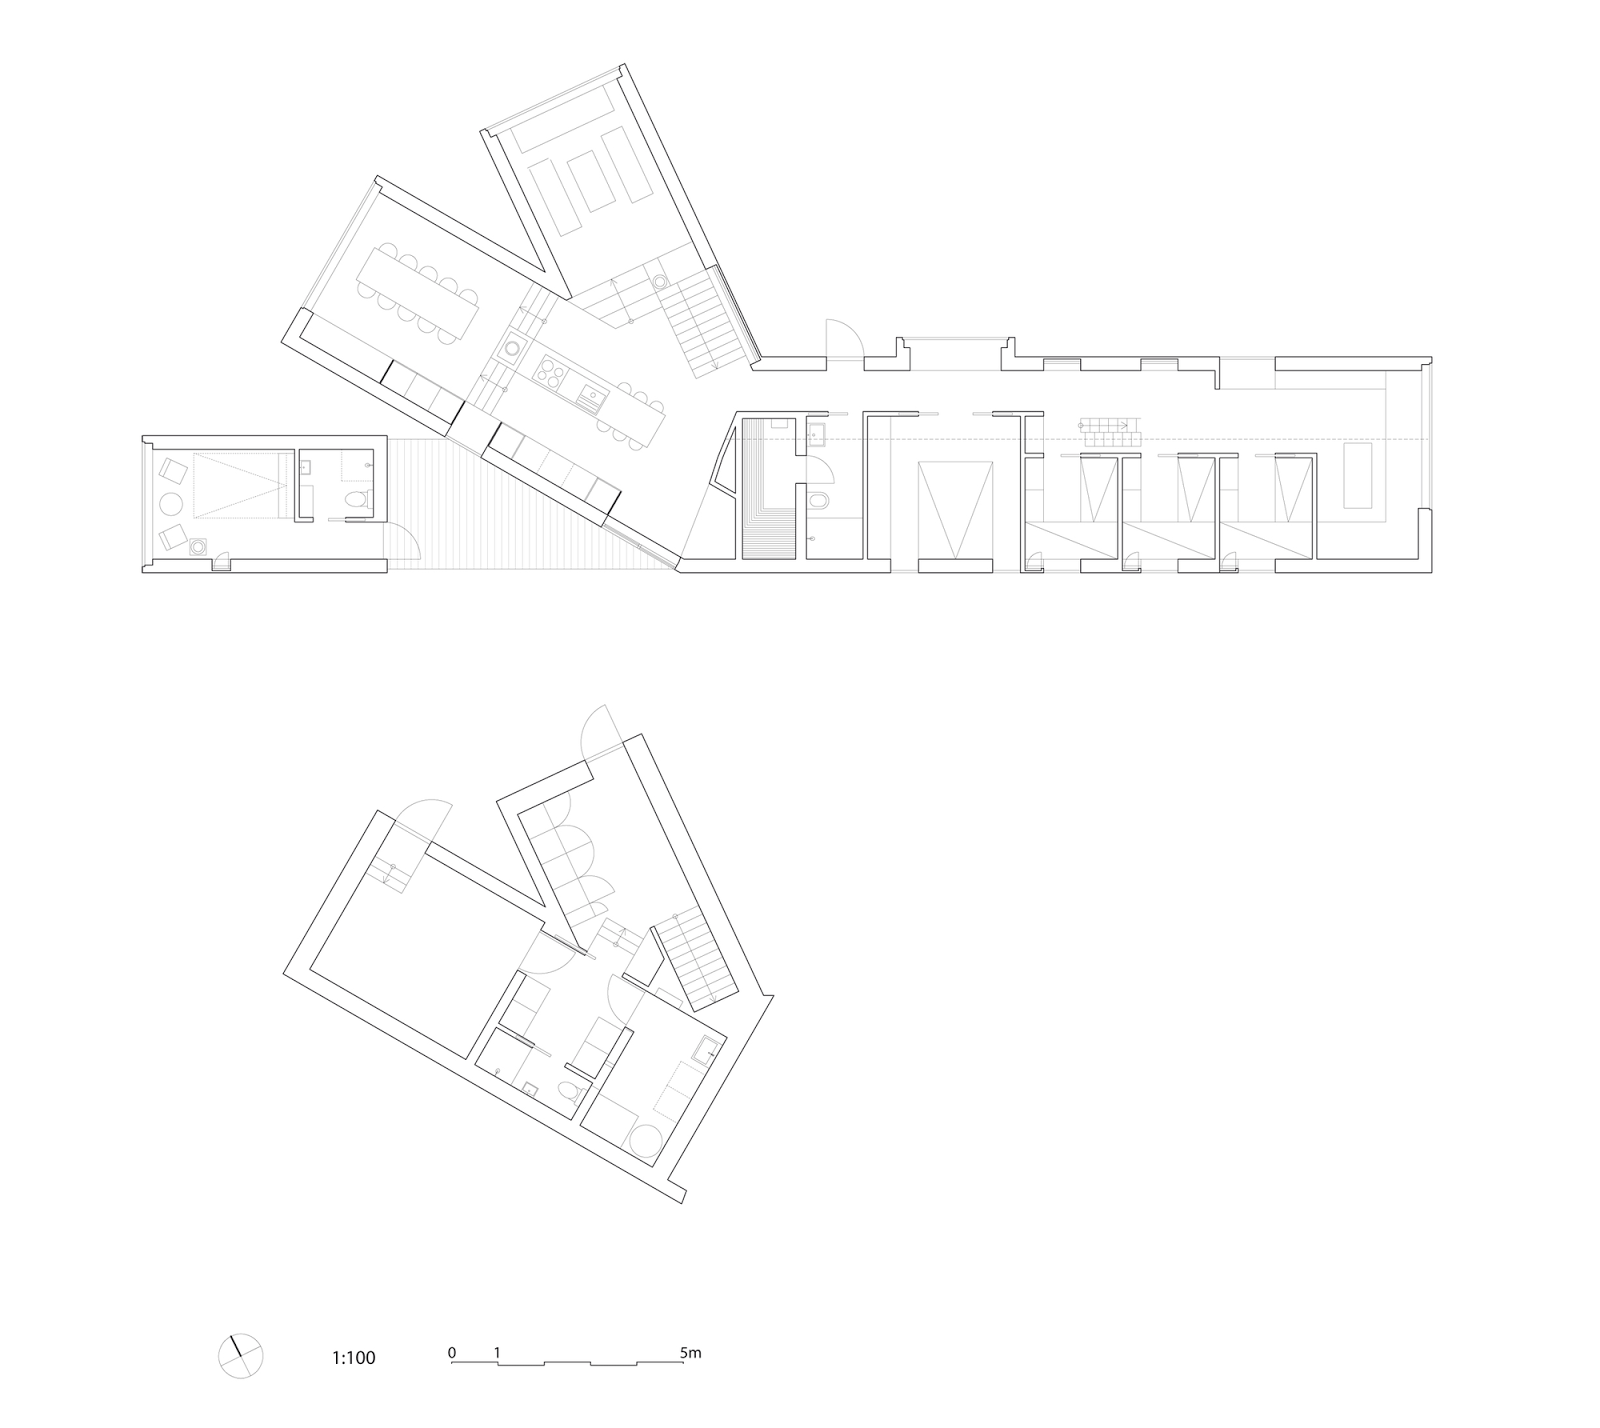 Split View Mountain Lodge / Reiulf Ramstad Arkitekter